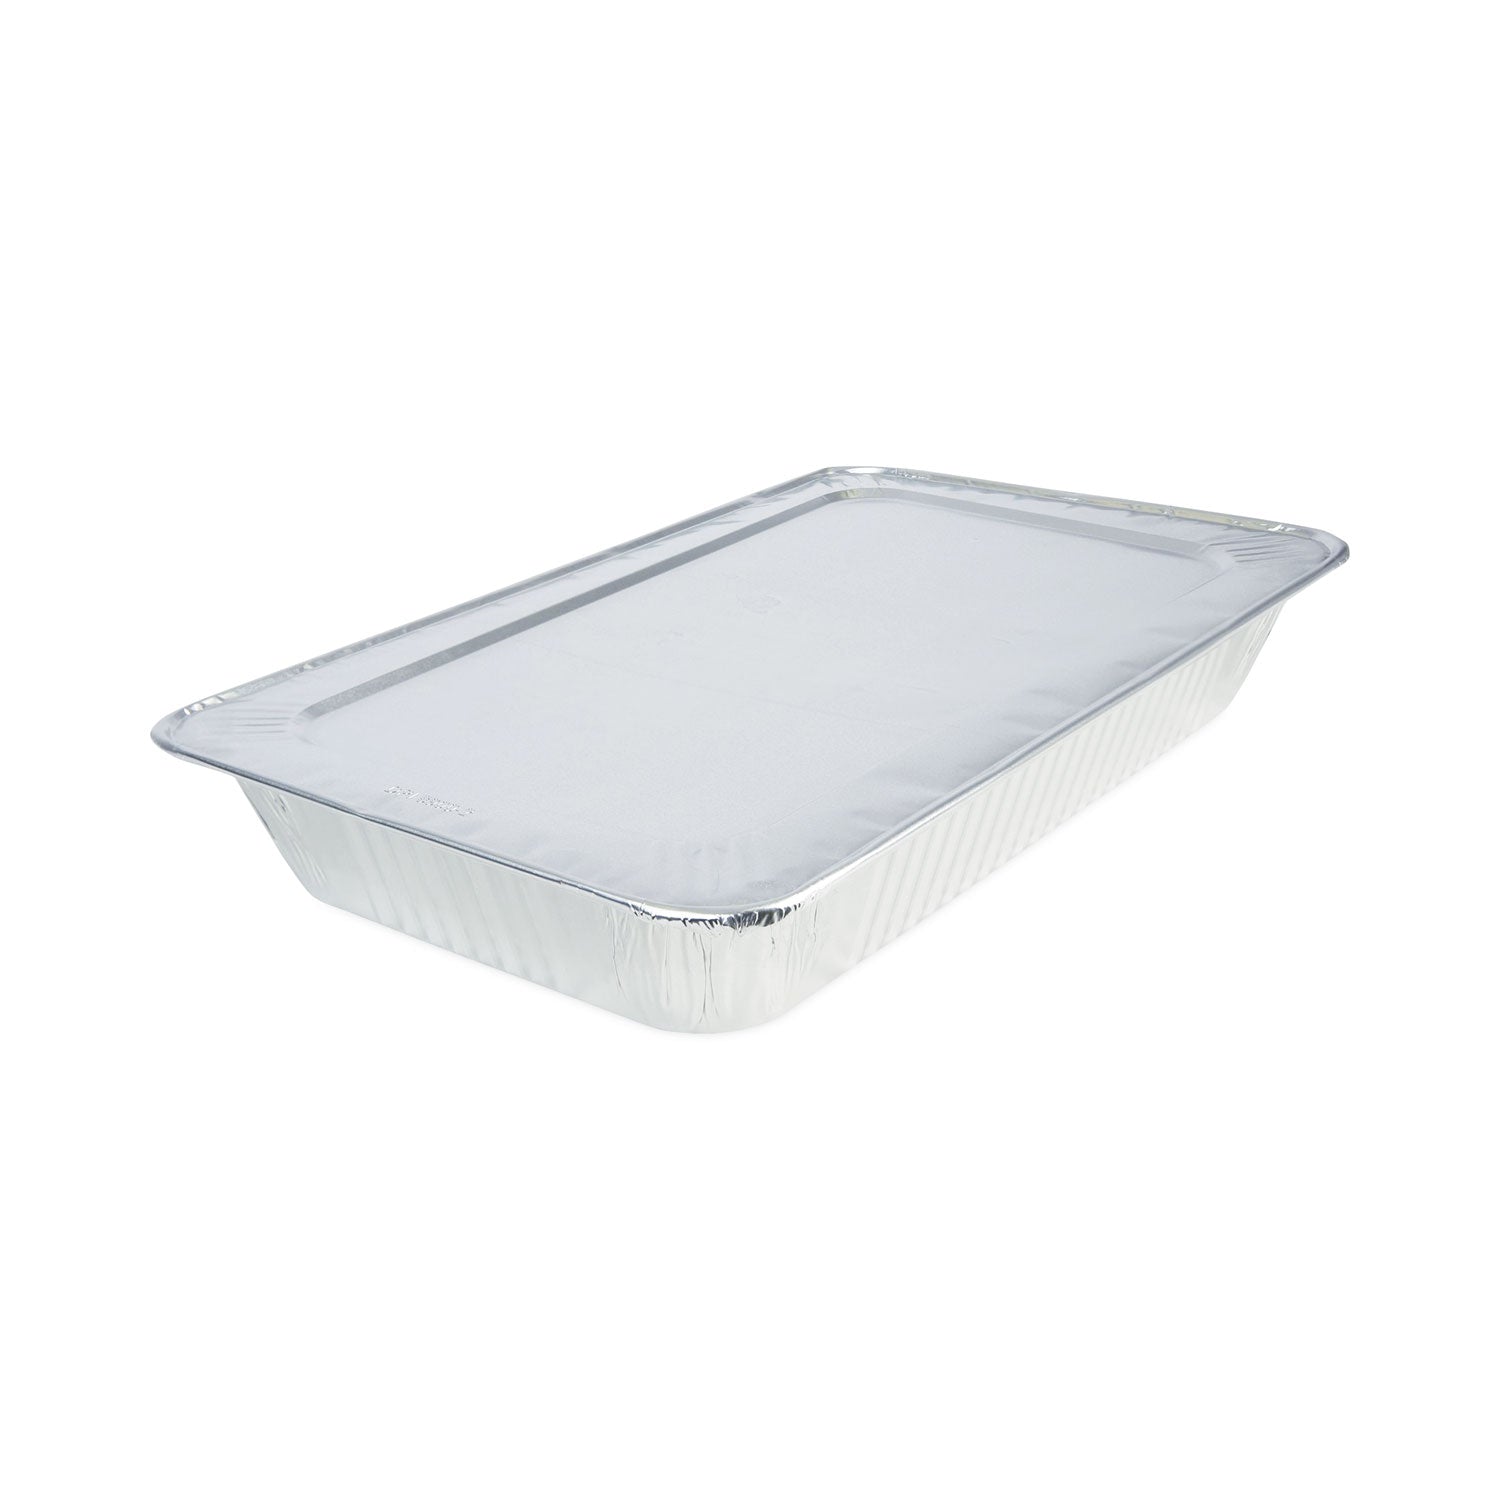 Aluminum Steam Table Pans, Full-Size Deep, 3.19" Deep, 12.81 x 20.75, 50/Carton - 